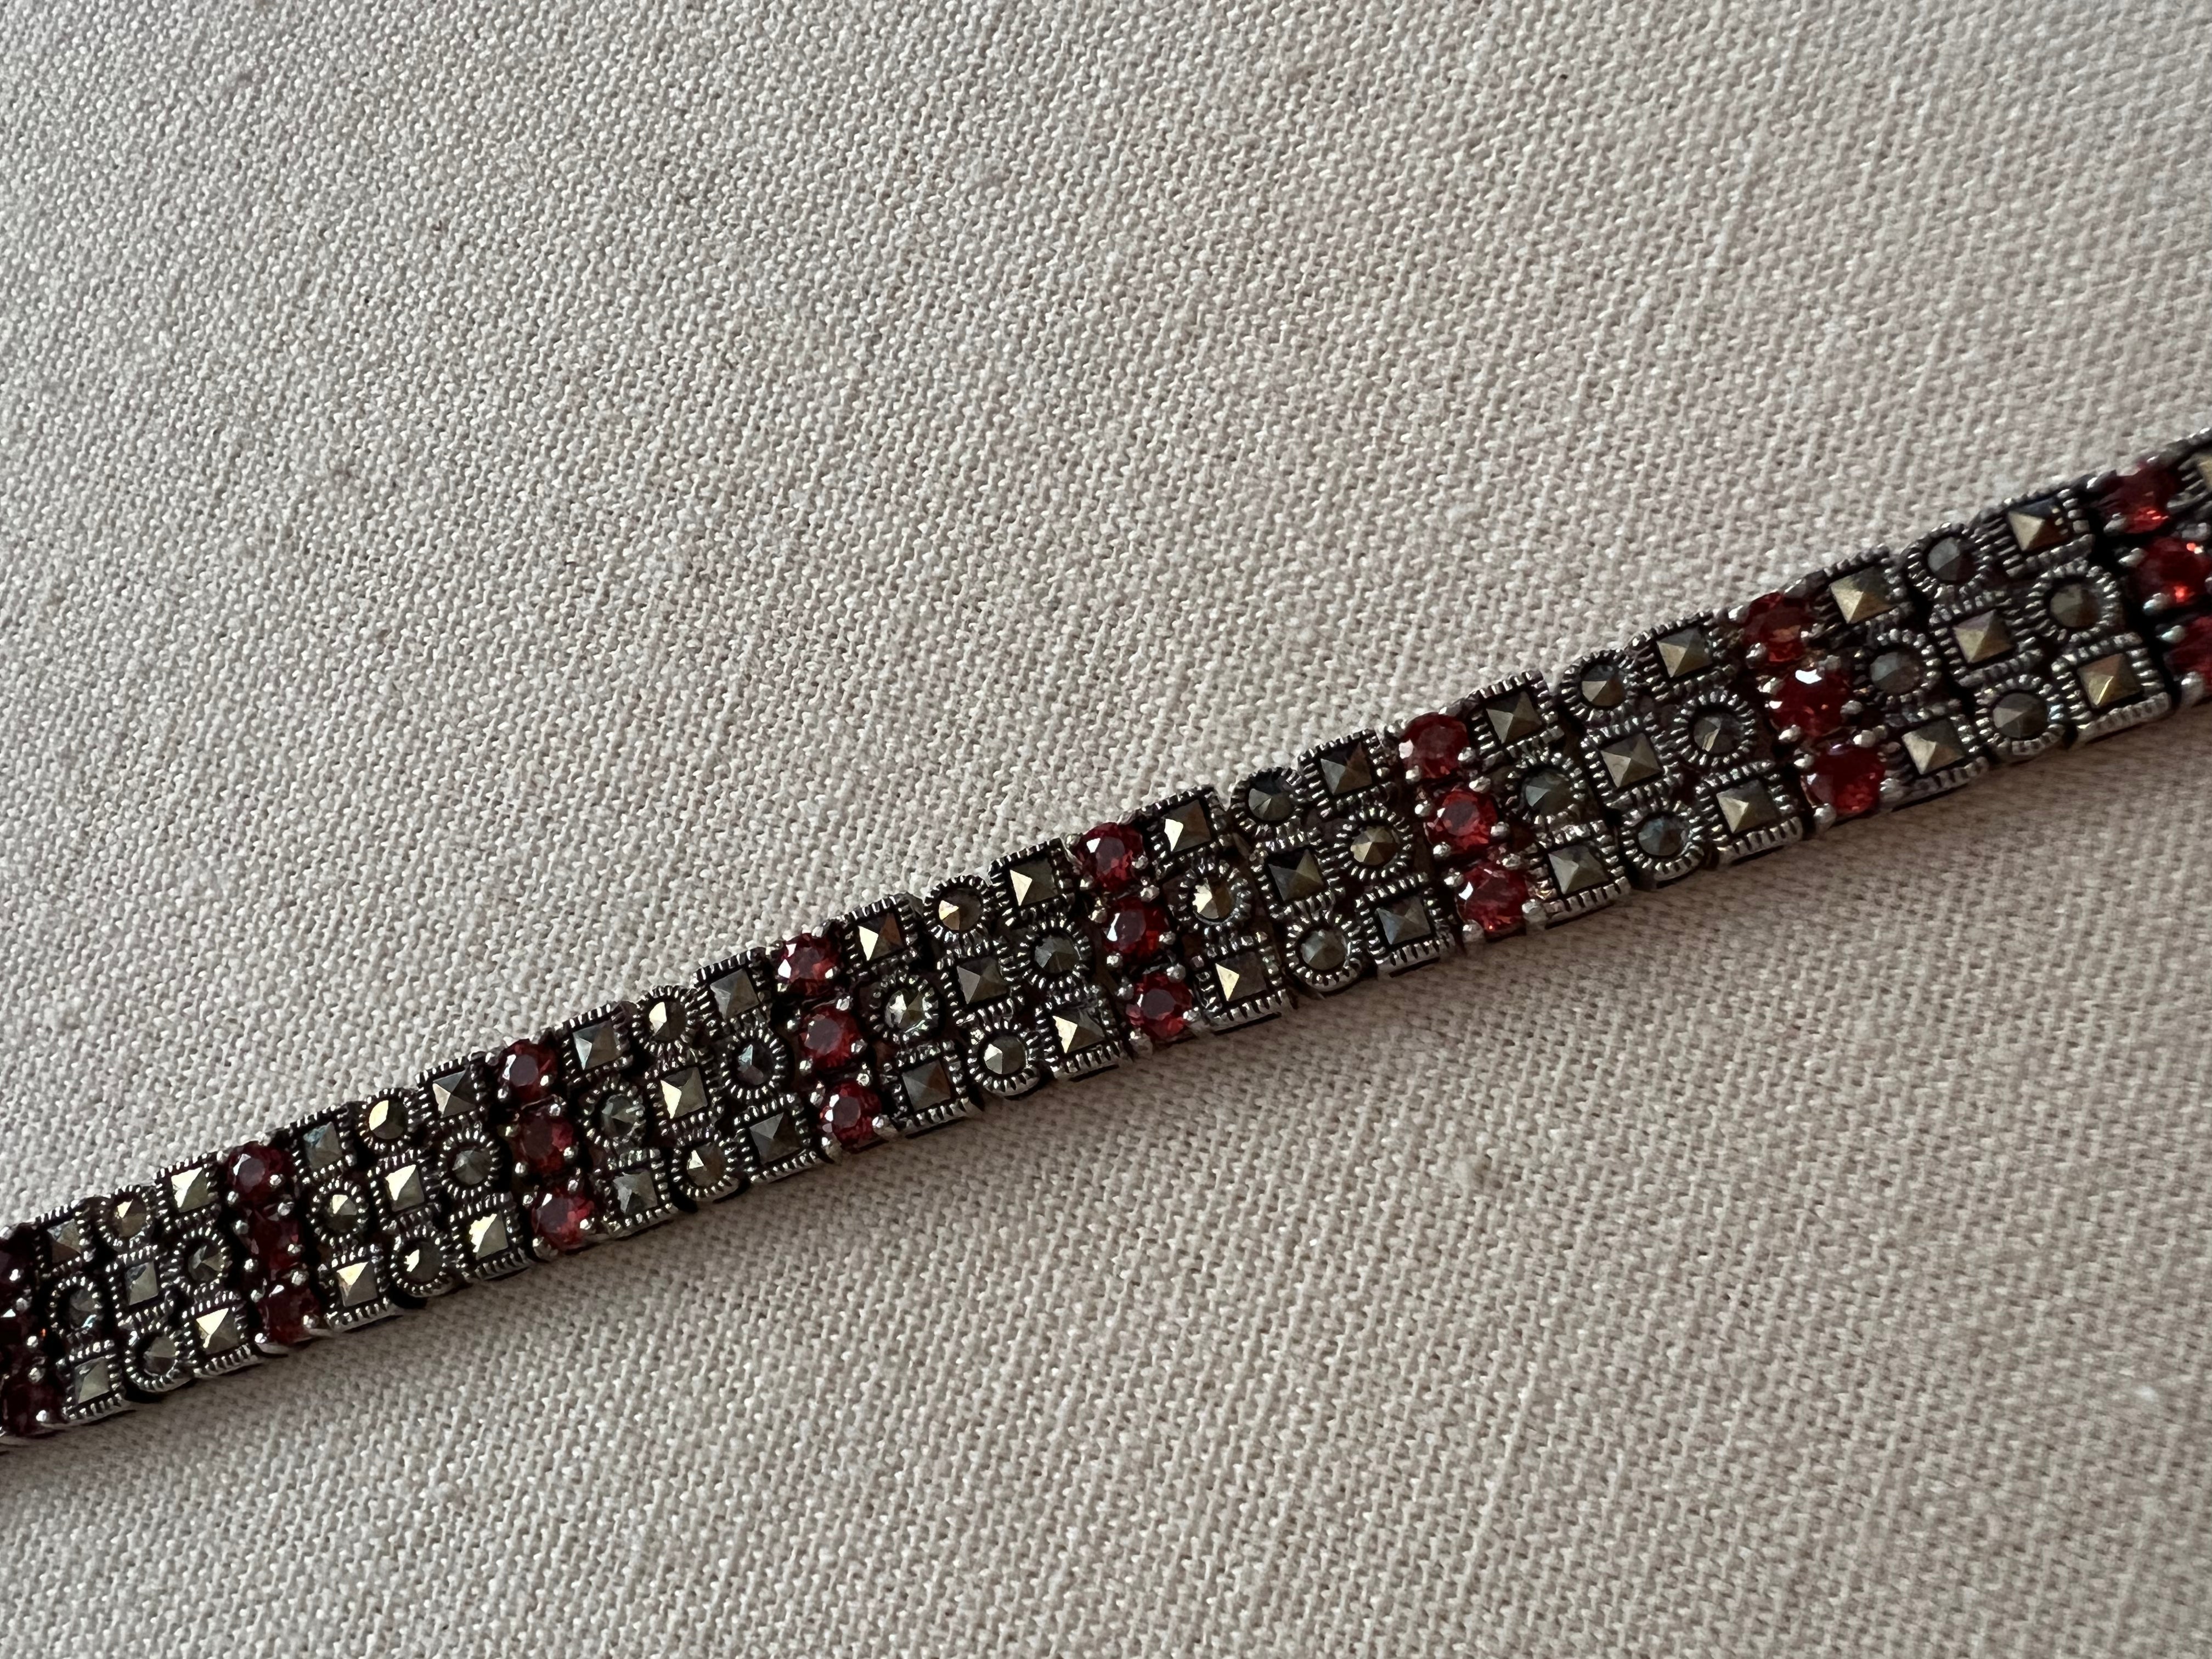 Rhinestone Sterling Silver Vintage Bracelet